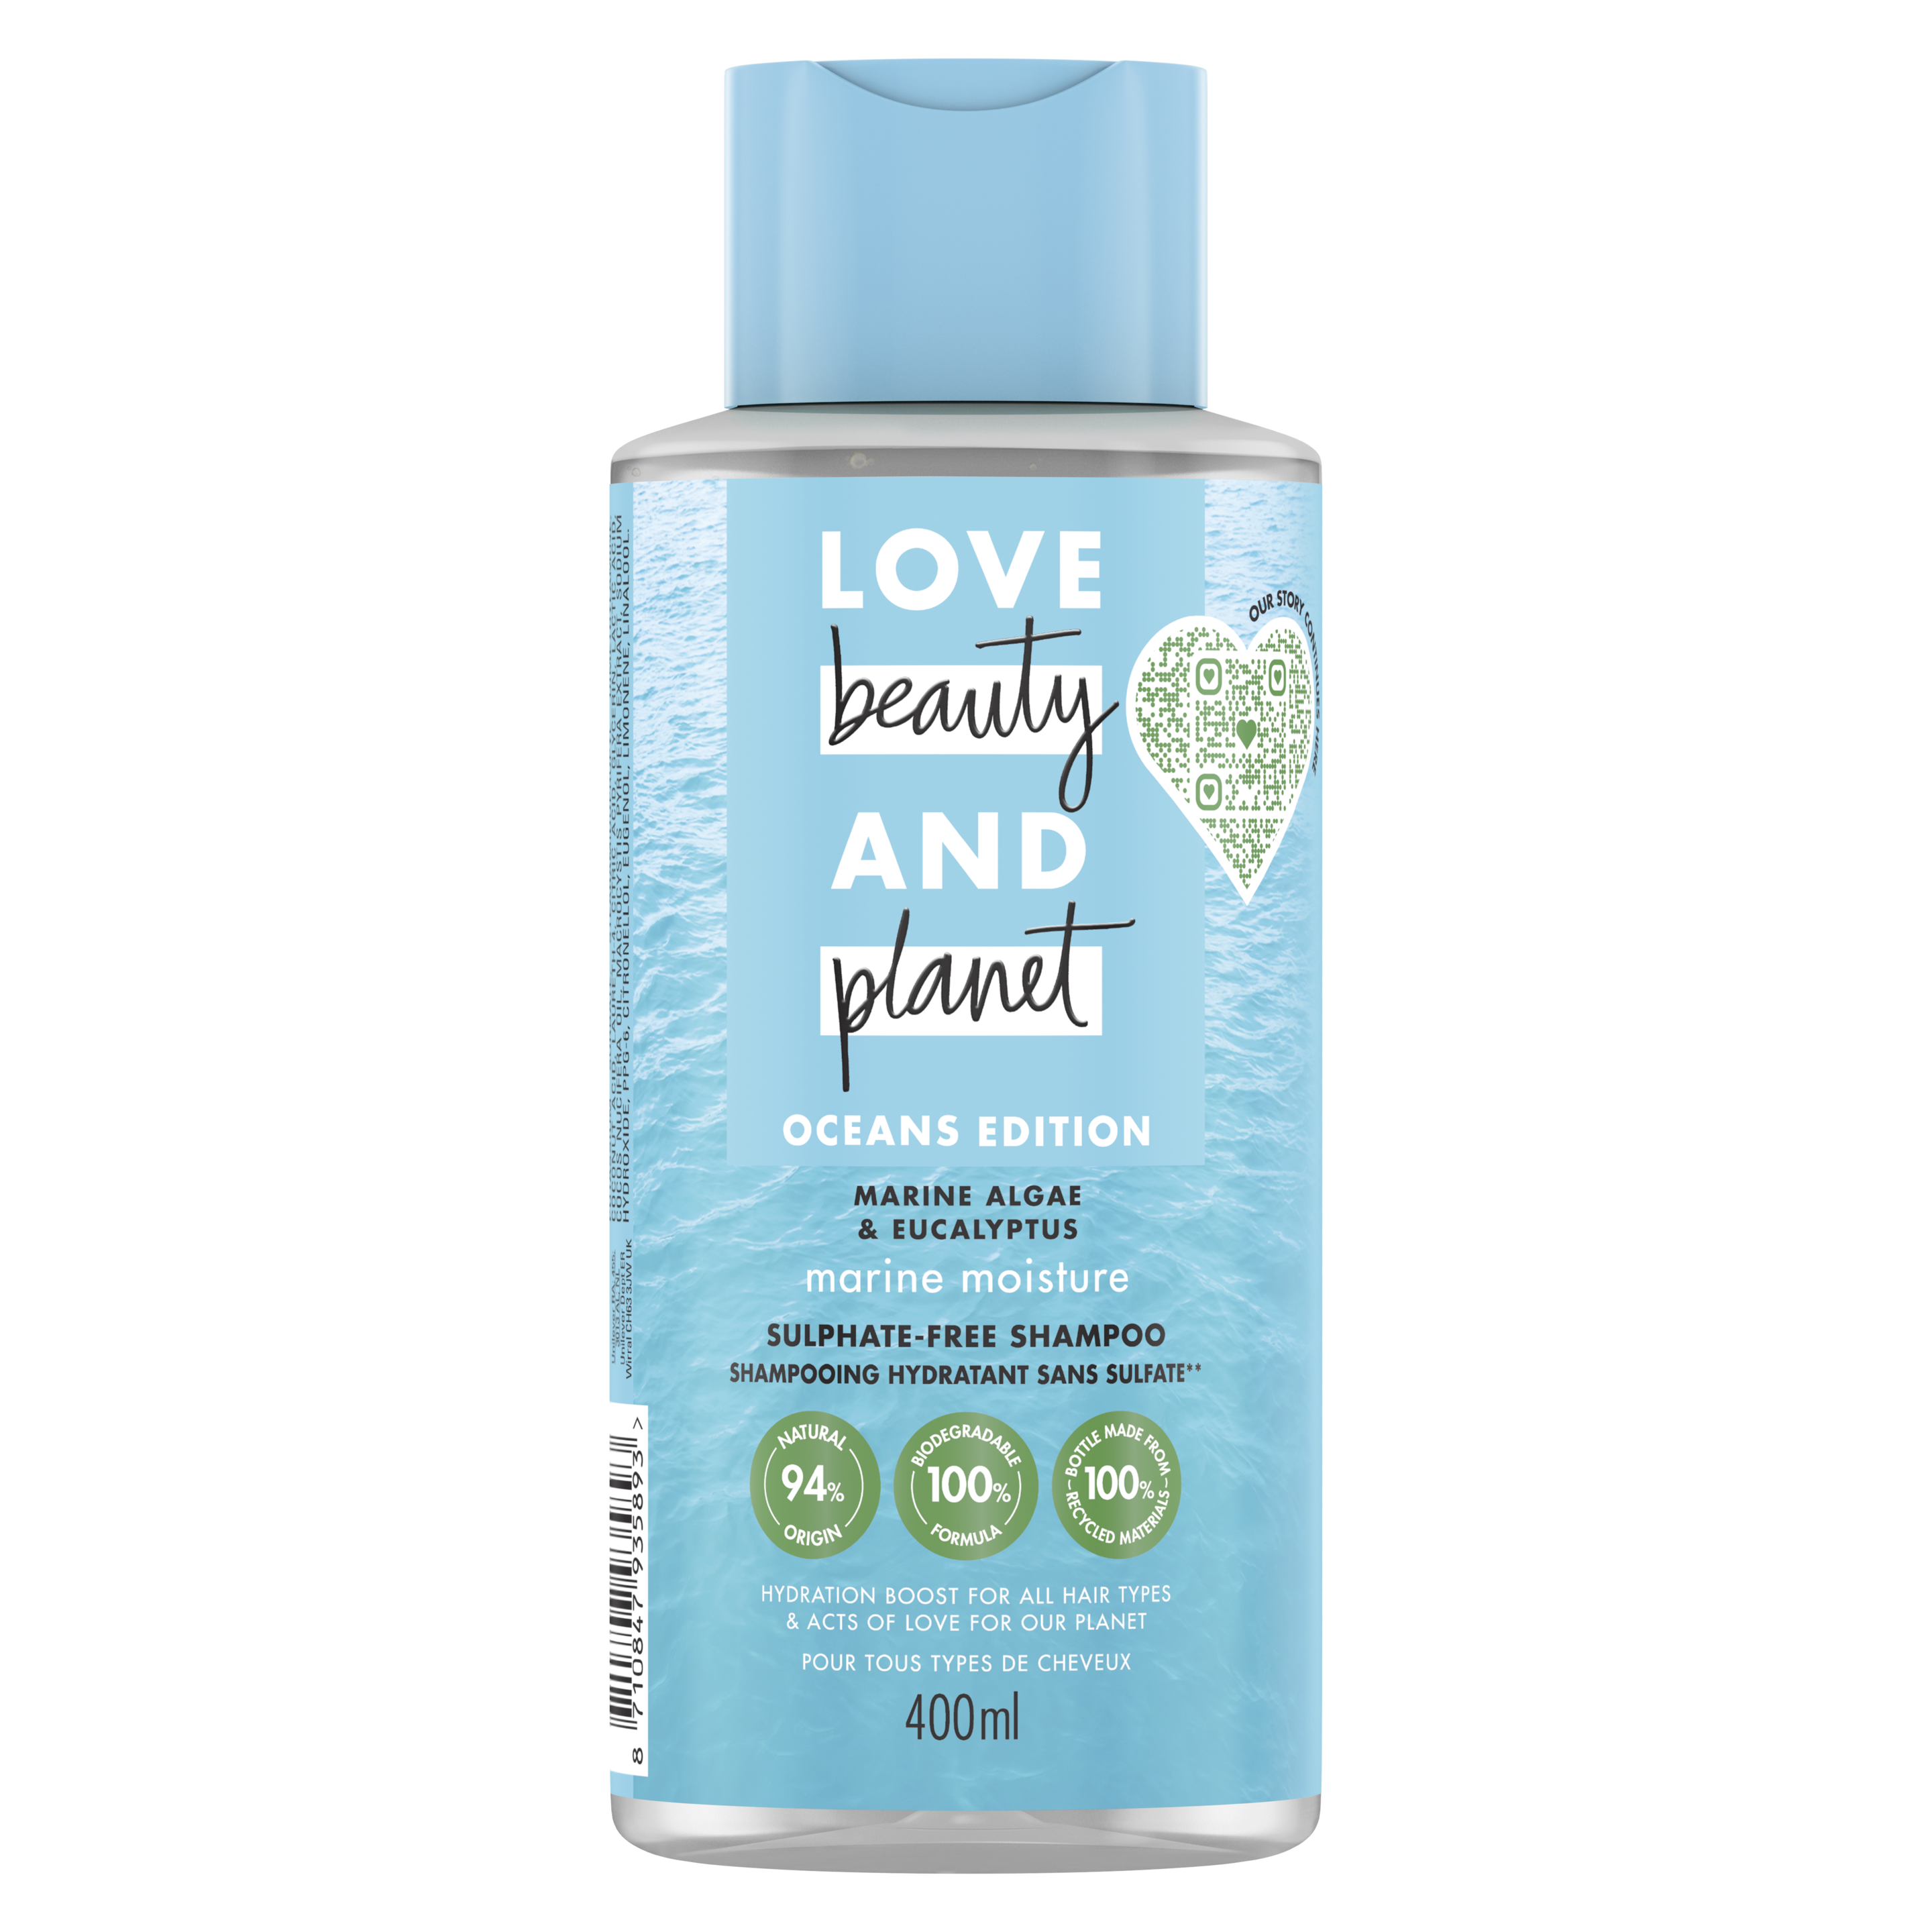 Voorkant verpakking shampoo Love Beauty and Planet Marine Algae & Eucalyptus Shampoo 400ml